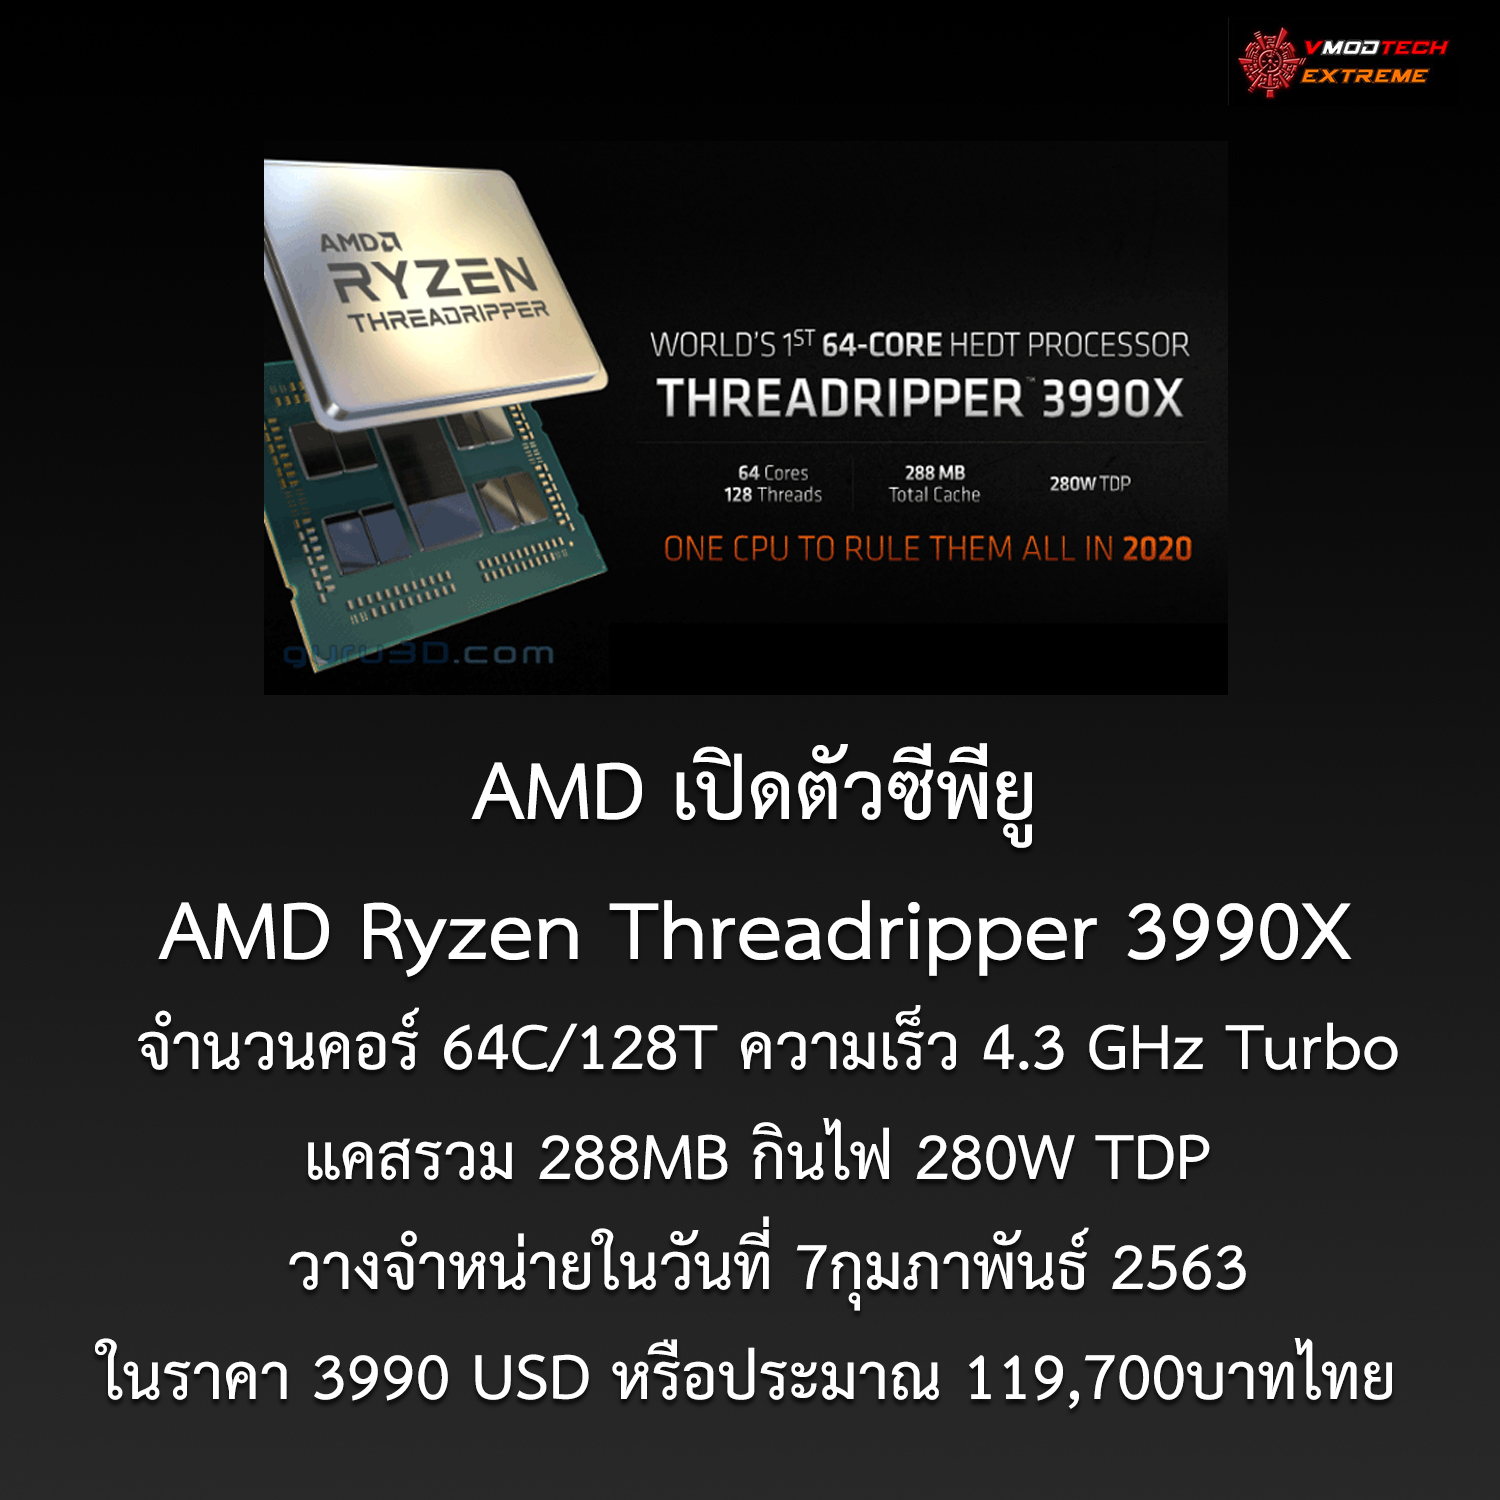 amd threadripper 3990x 3990usd AMD เปิดตัวซีพียู AMD Ryzen Threadripper 3990X 64C/128T ความเร็ว 4.3 GHz Turbo วางจำหน่ายในราคา 3990 USD หรือประมาณ 119,700บาทไทย  